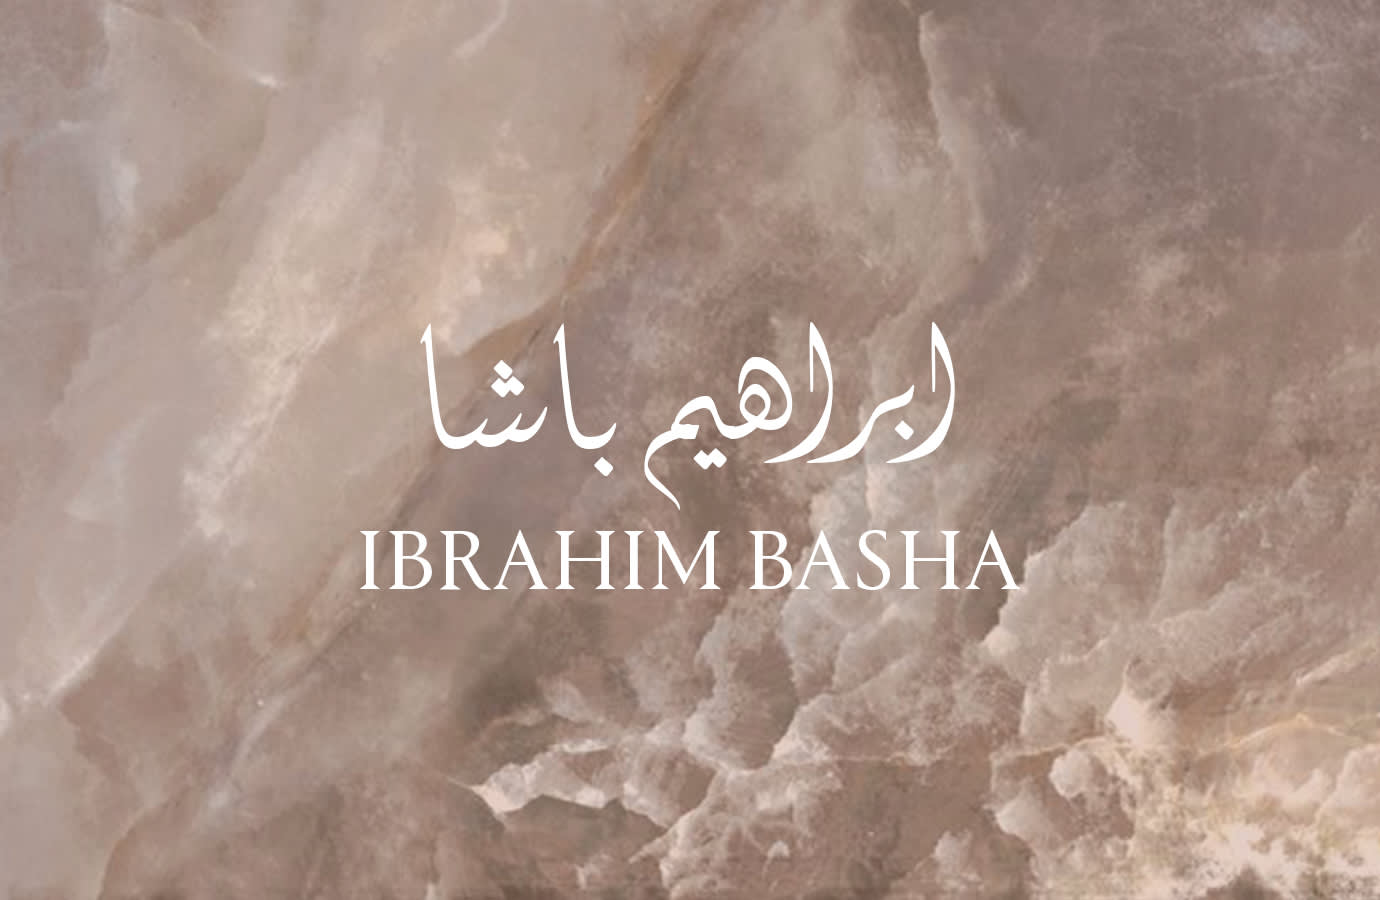 Ibrahim Basha TEXT ONLY LP